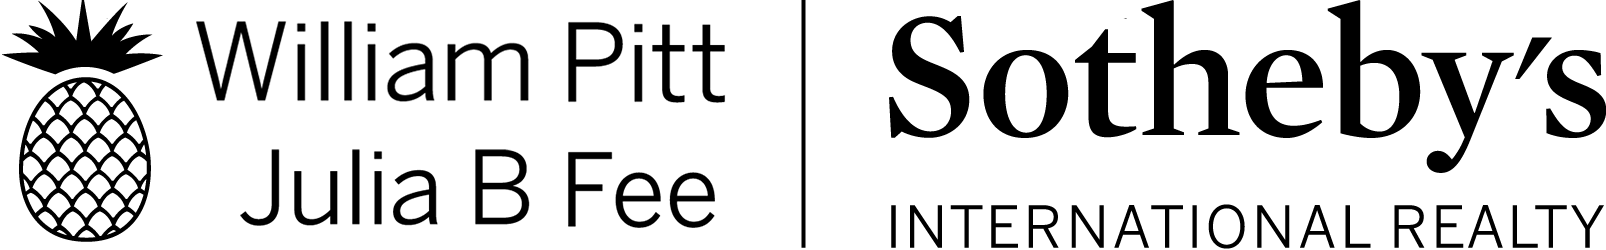 Combo Logo Black.png